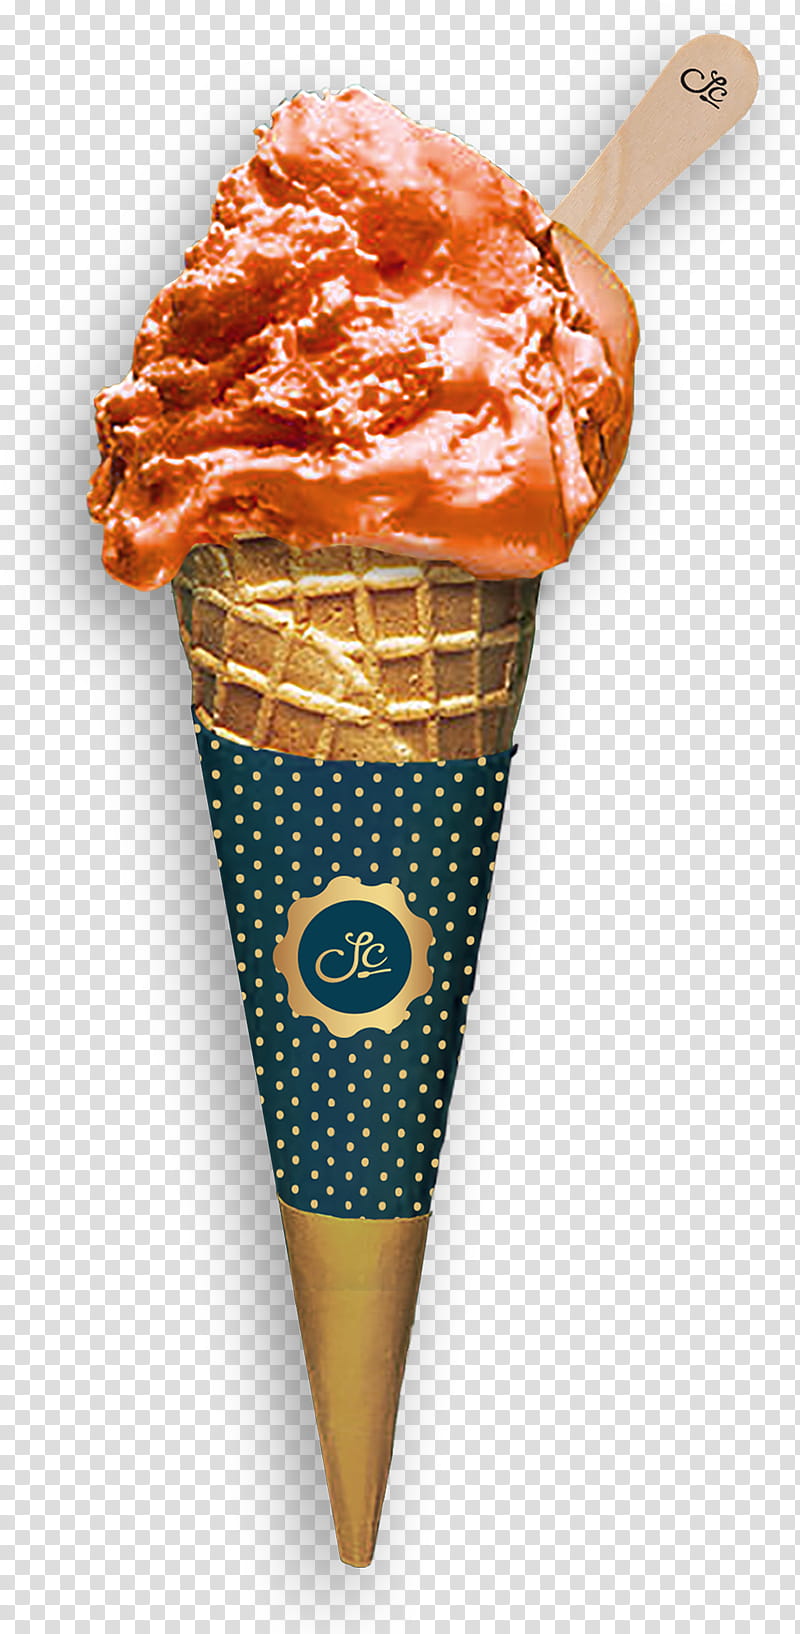 Ice Cream Cone, Gelato, Chocolate Ice Cream, Southern Charm Gelato Shoppe, Ice Cream Cones, Logo, Sorbet, Food transparent background PNG clipart